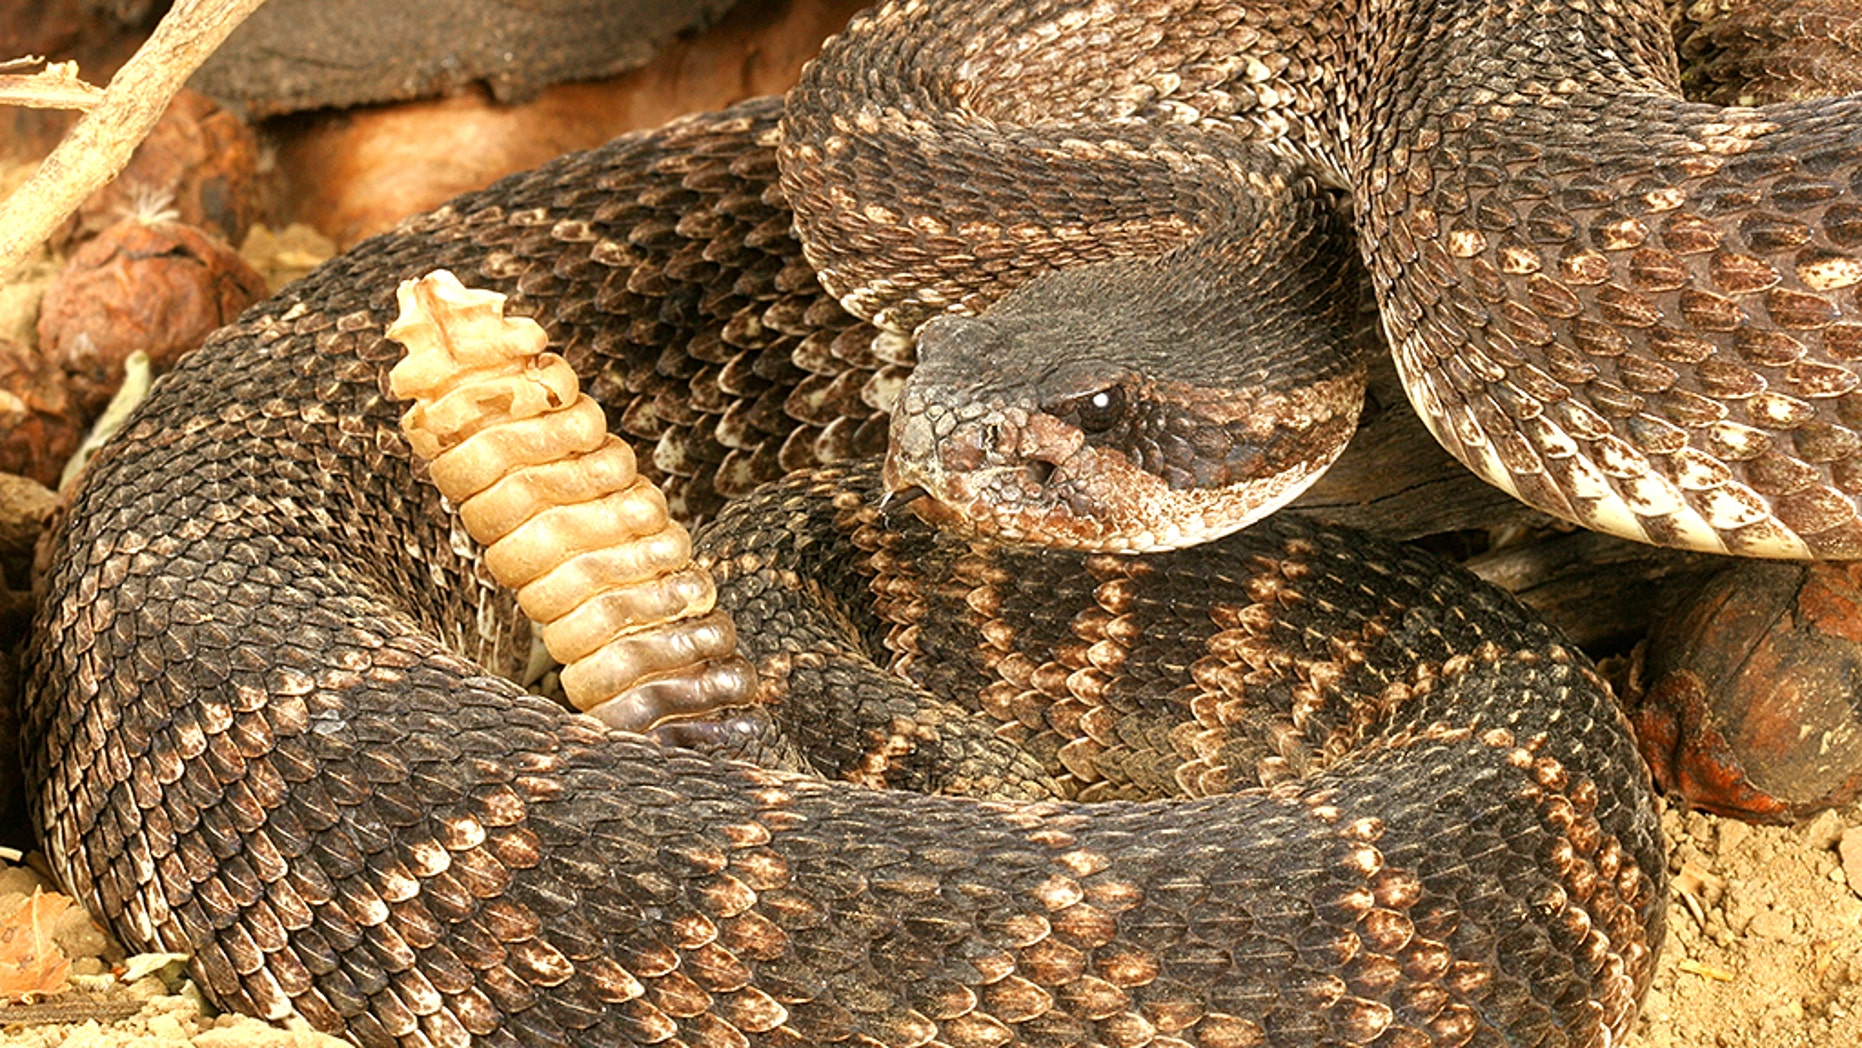 Man checks under house, finds dozens of rattlesnakes slithering around